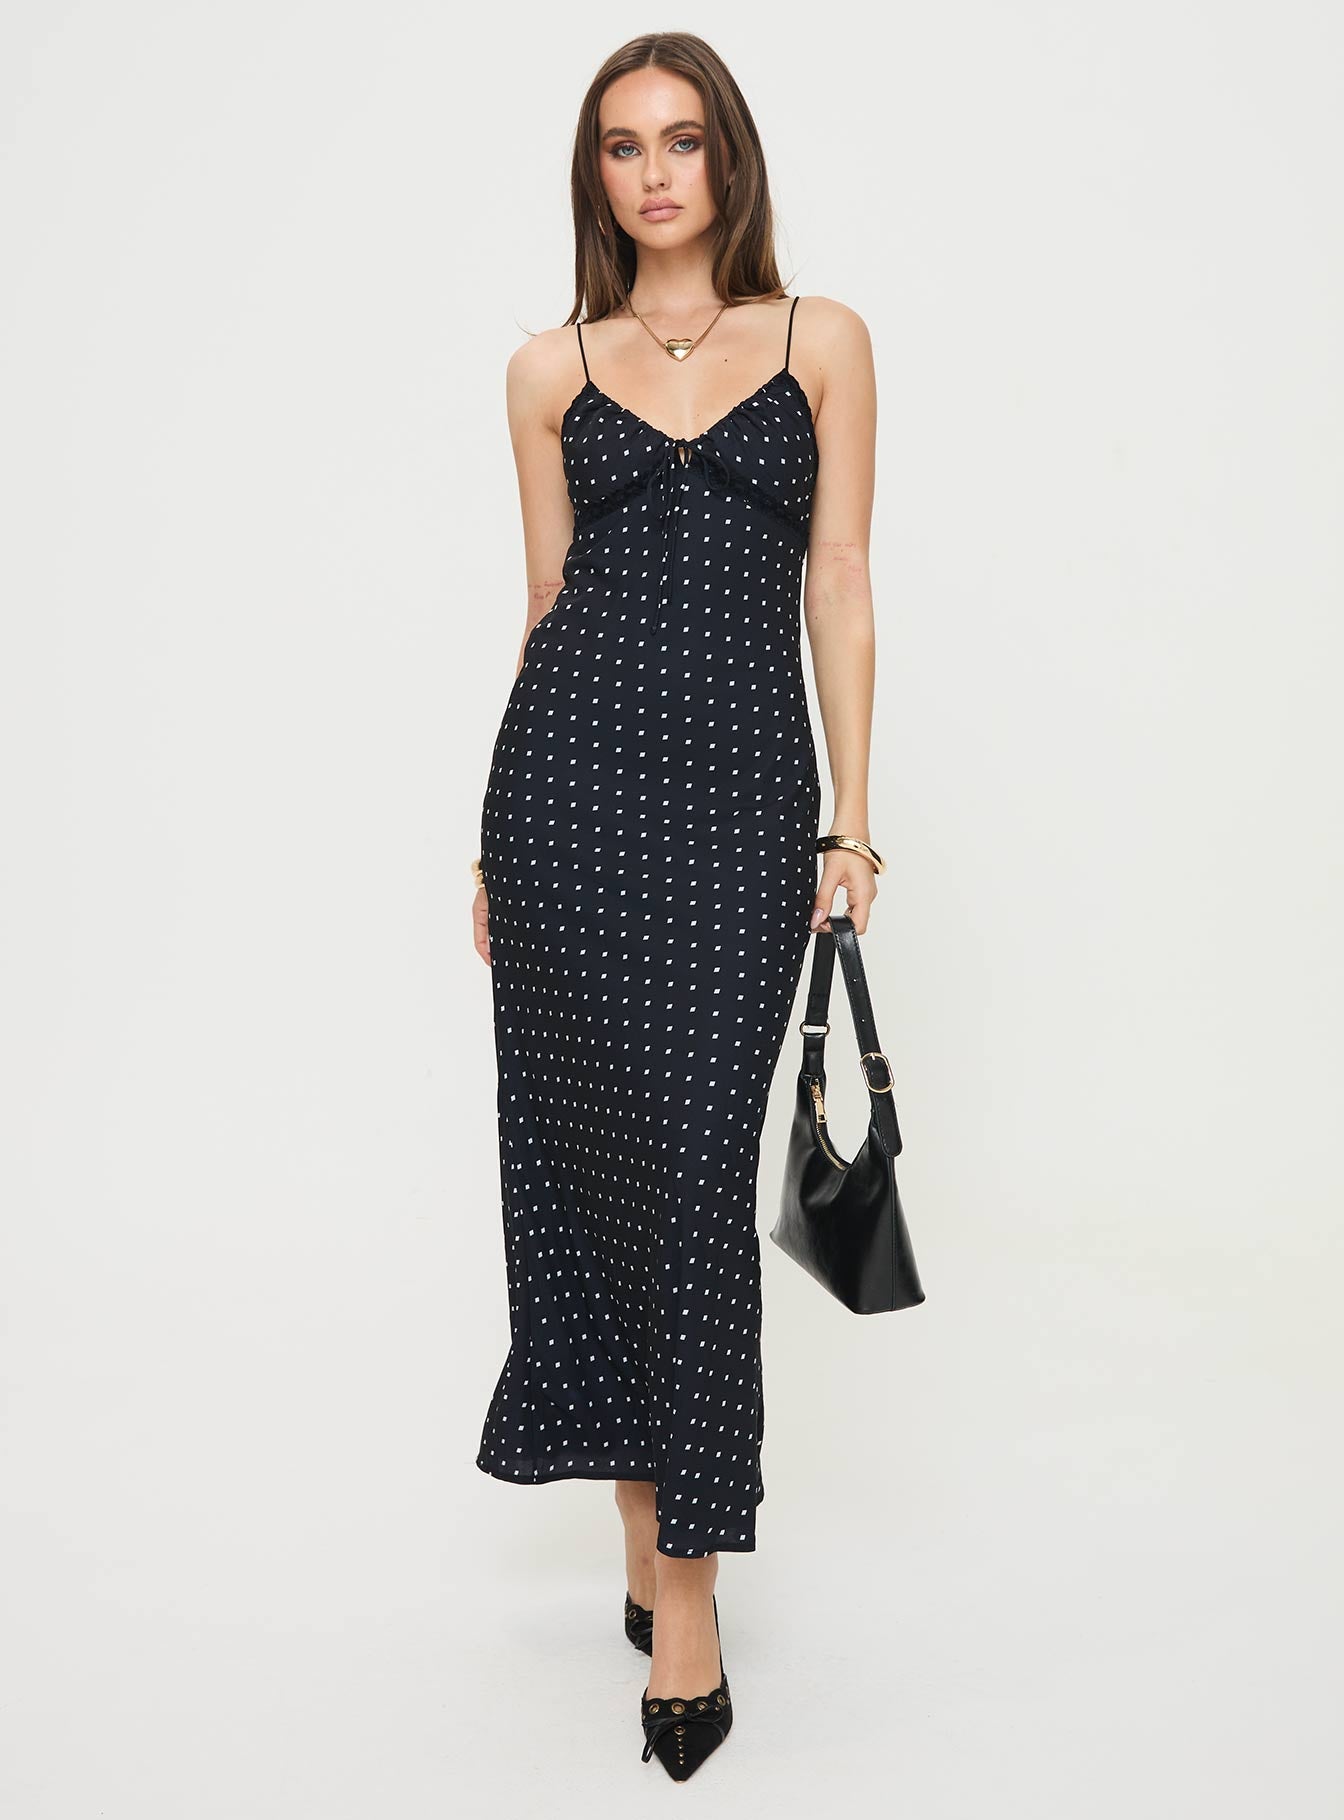 Shop Formal Dress - Emily Maxi Dress Black Polka Dot fifth image